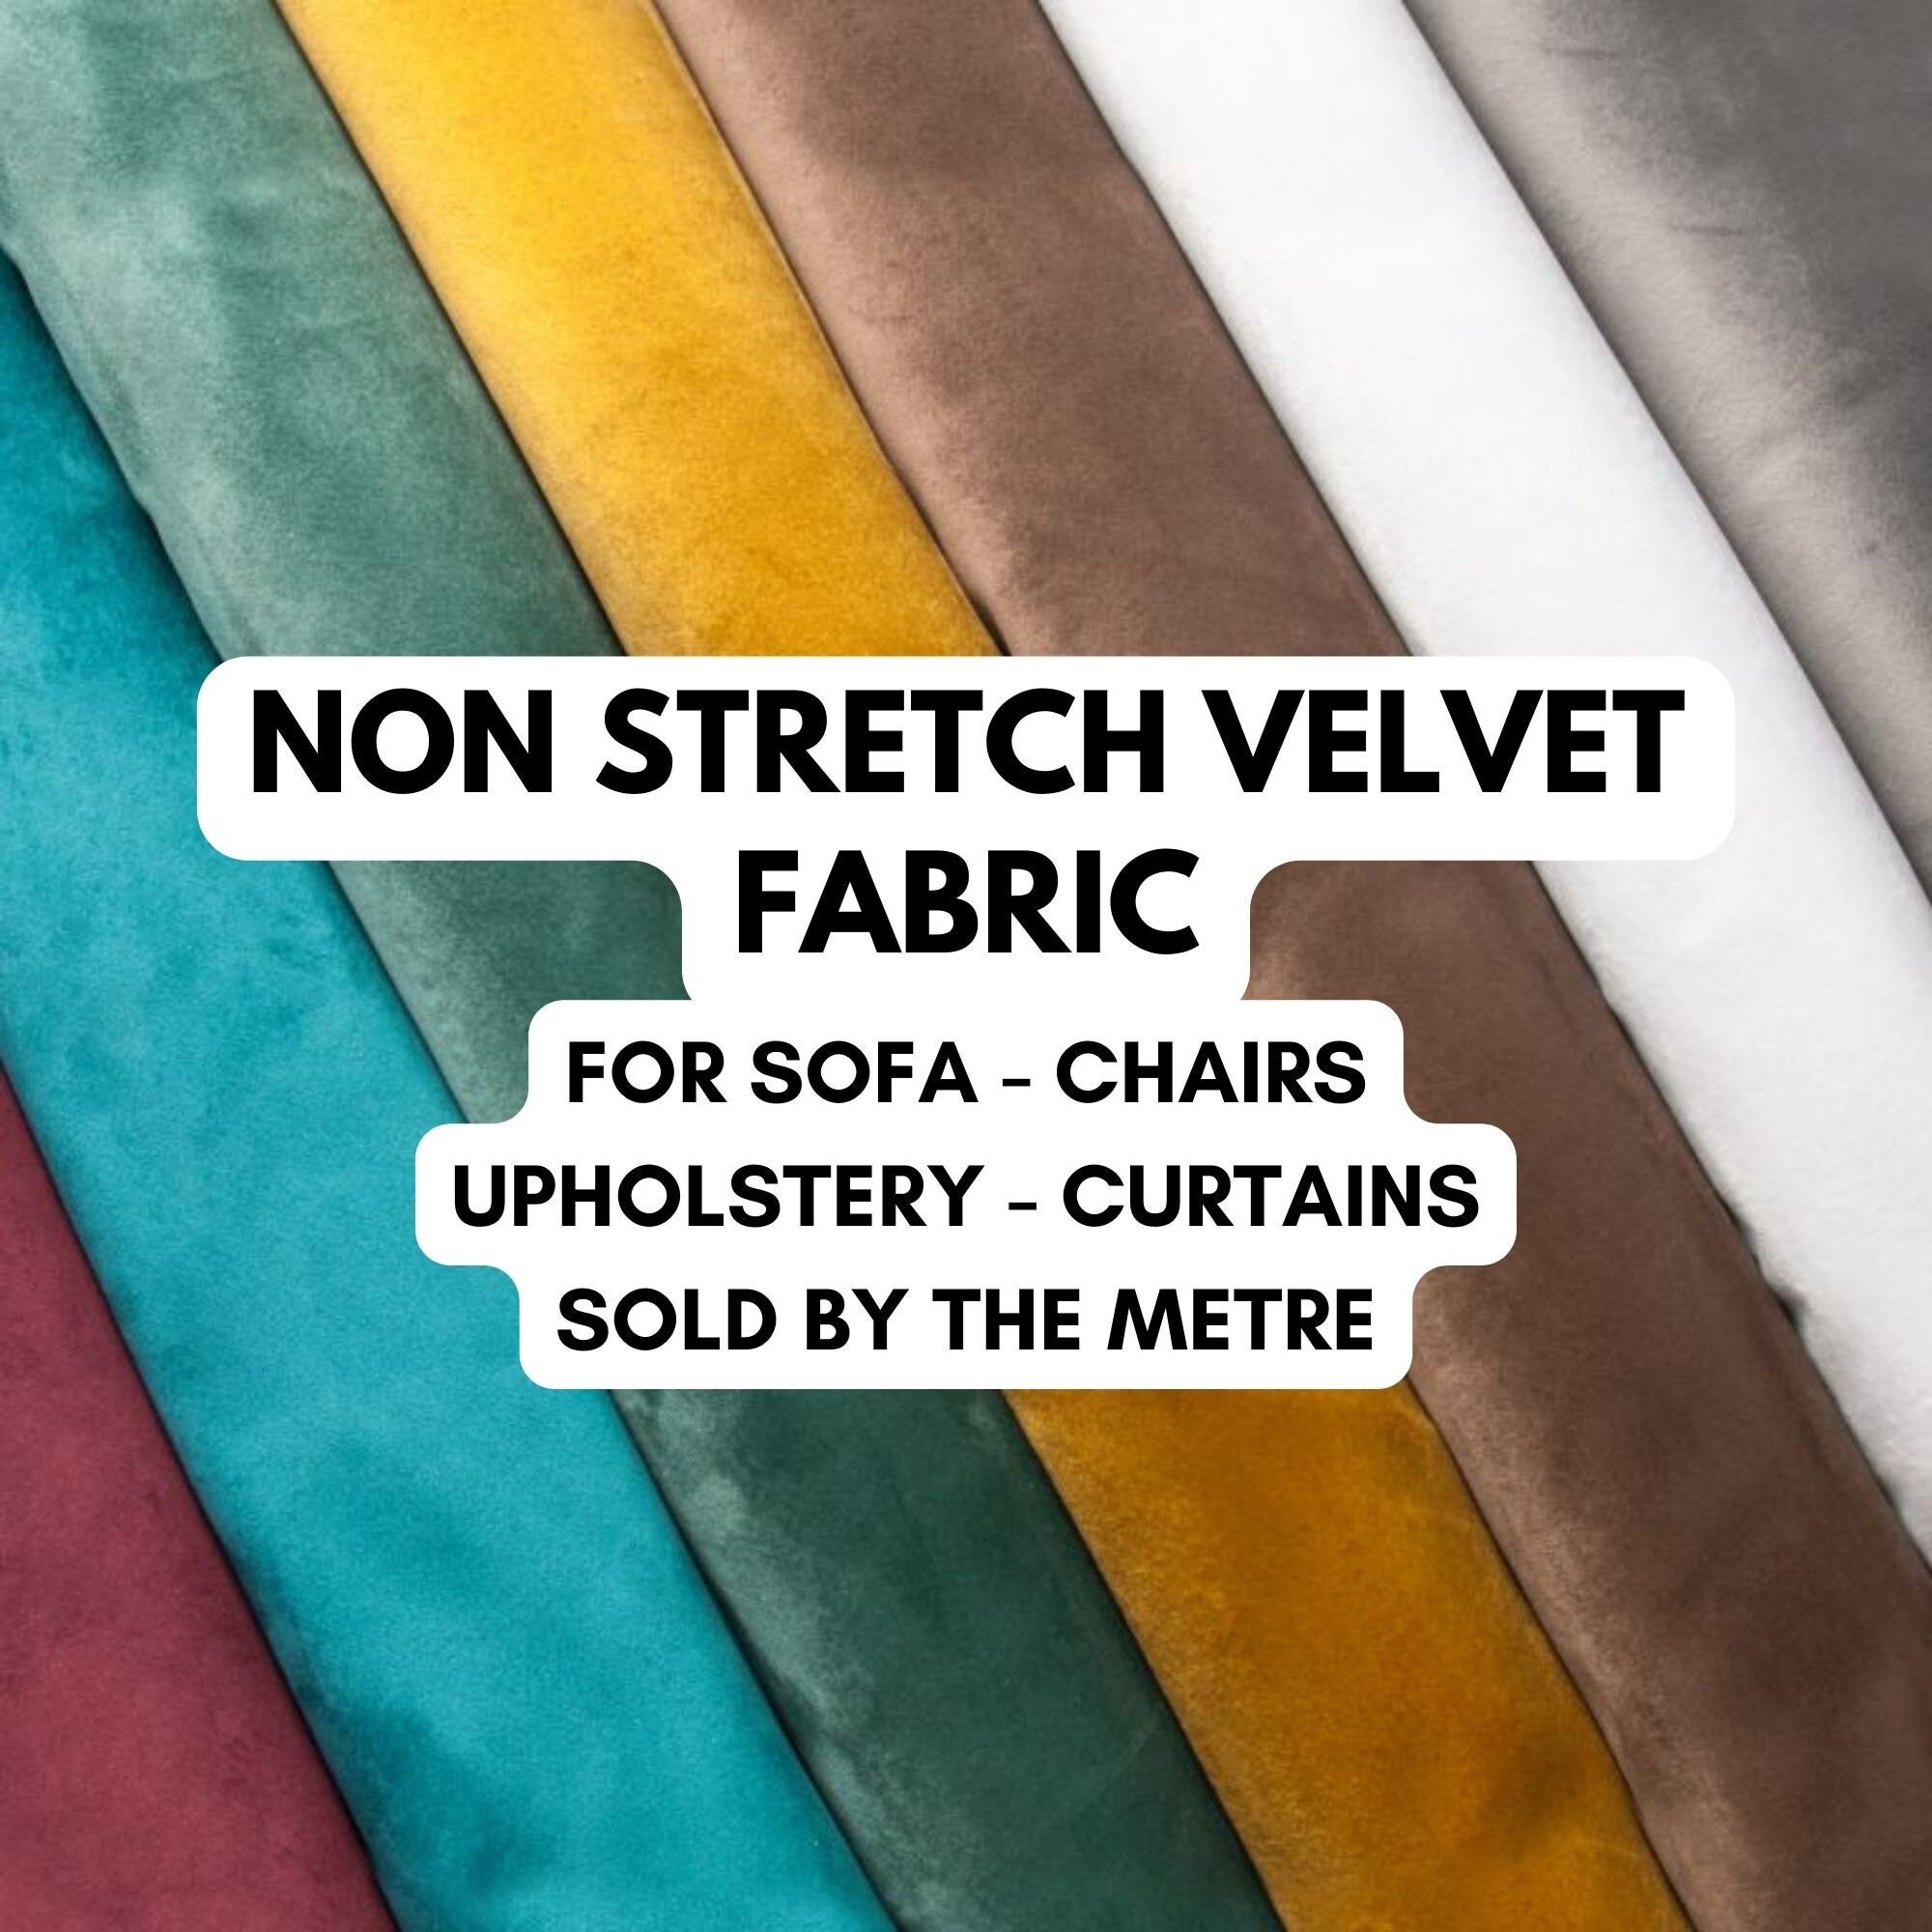 Velvet Cloth Sofa Fabric, Flat, Gold, 145cm